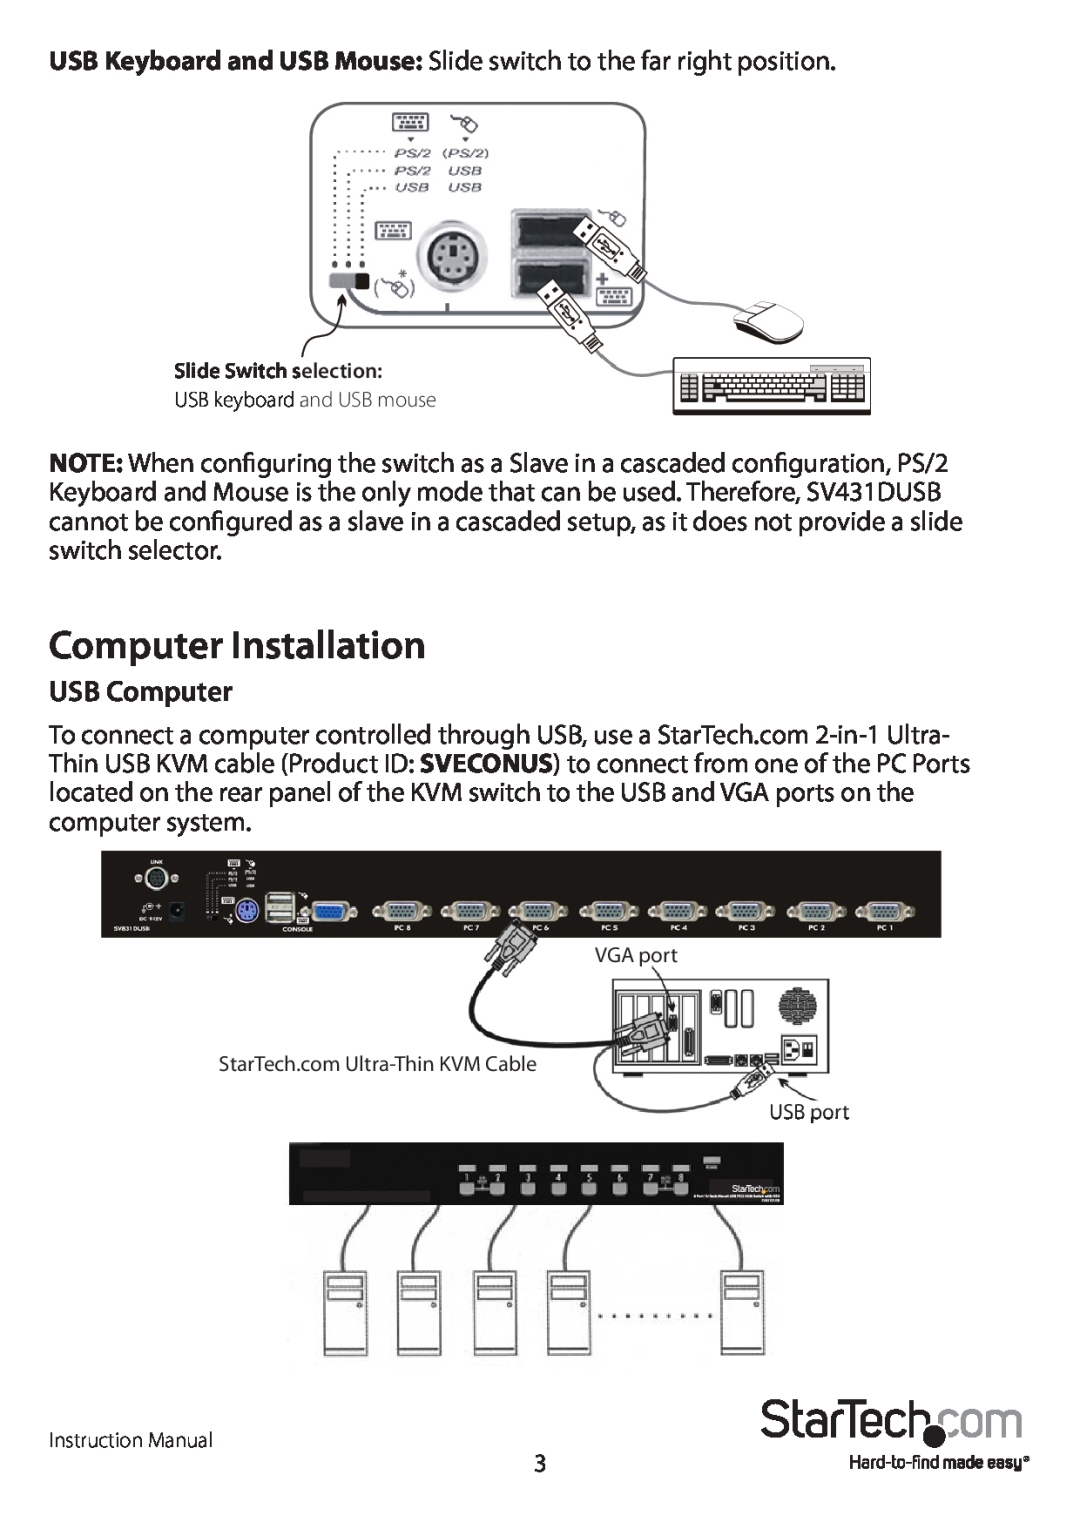 StarTech.com sv431dusb manual Computer Installation, USB Computer 